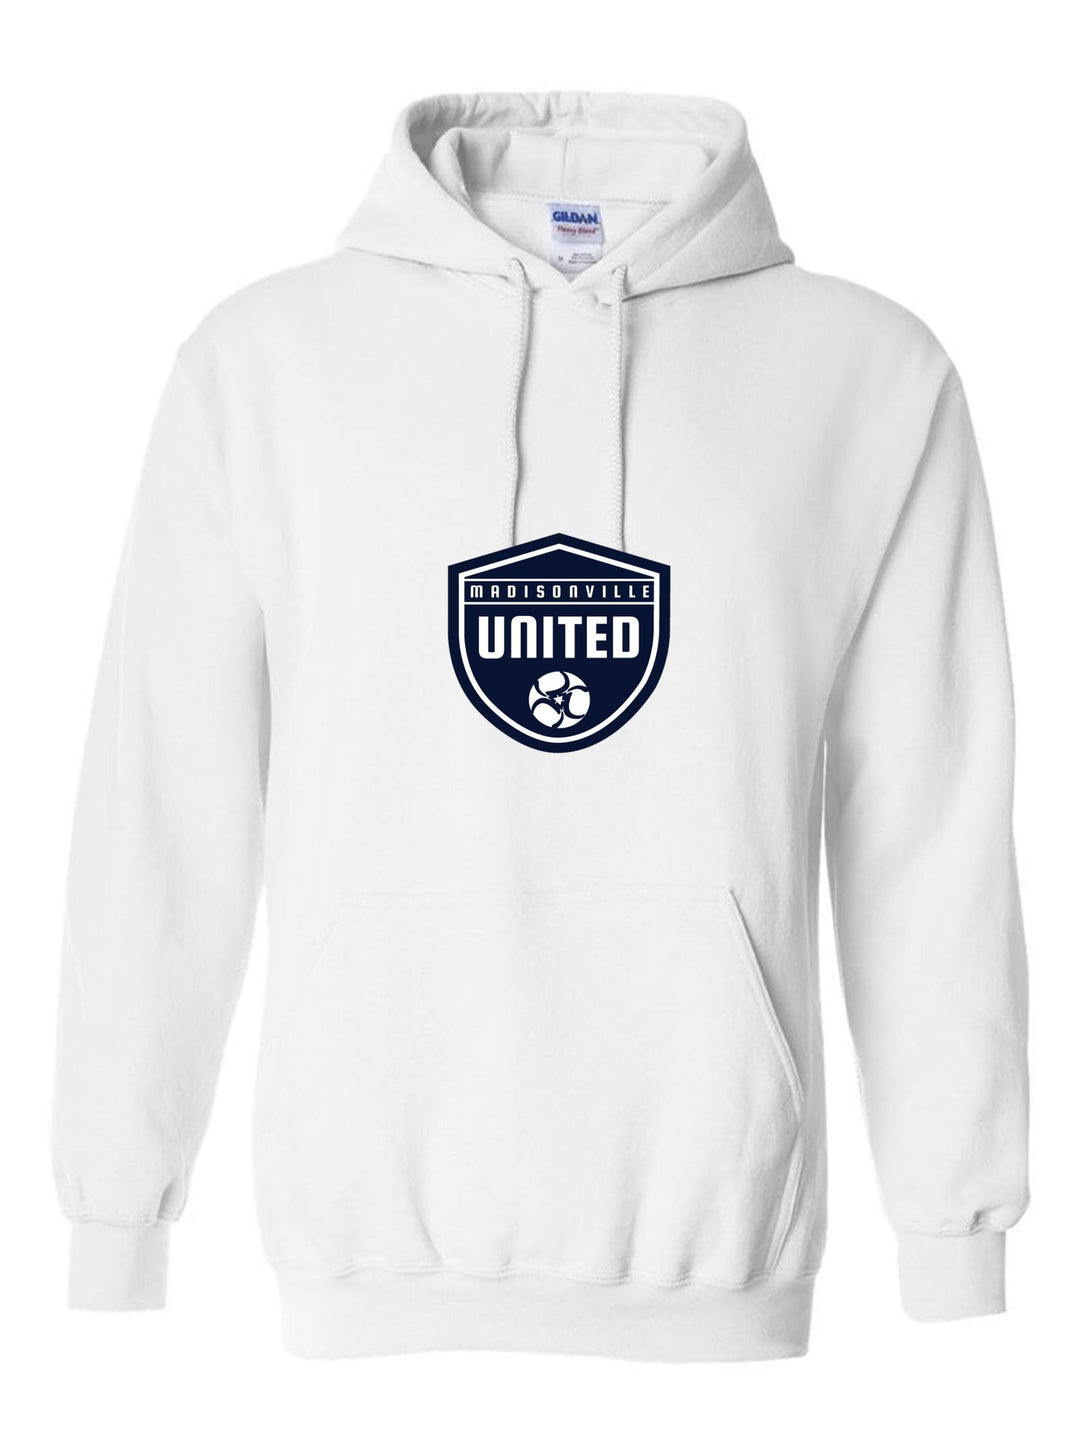 Madidsonville United Hoody - Black, Grey, Navy or White Madisonville United Spiritwear MENS EXTRA LARGE WHITE - Third Coast Soccer